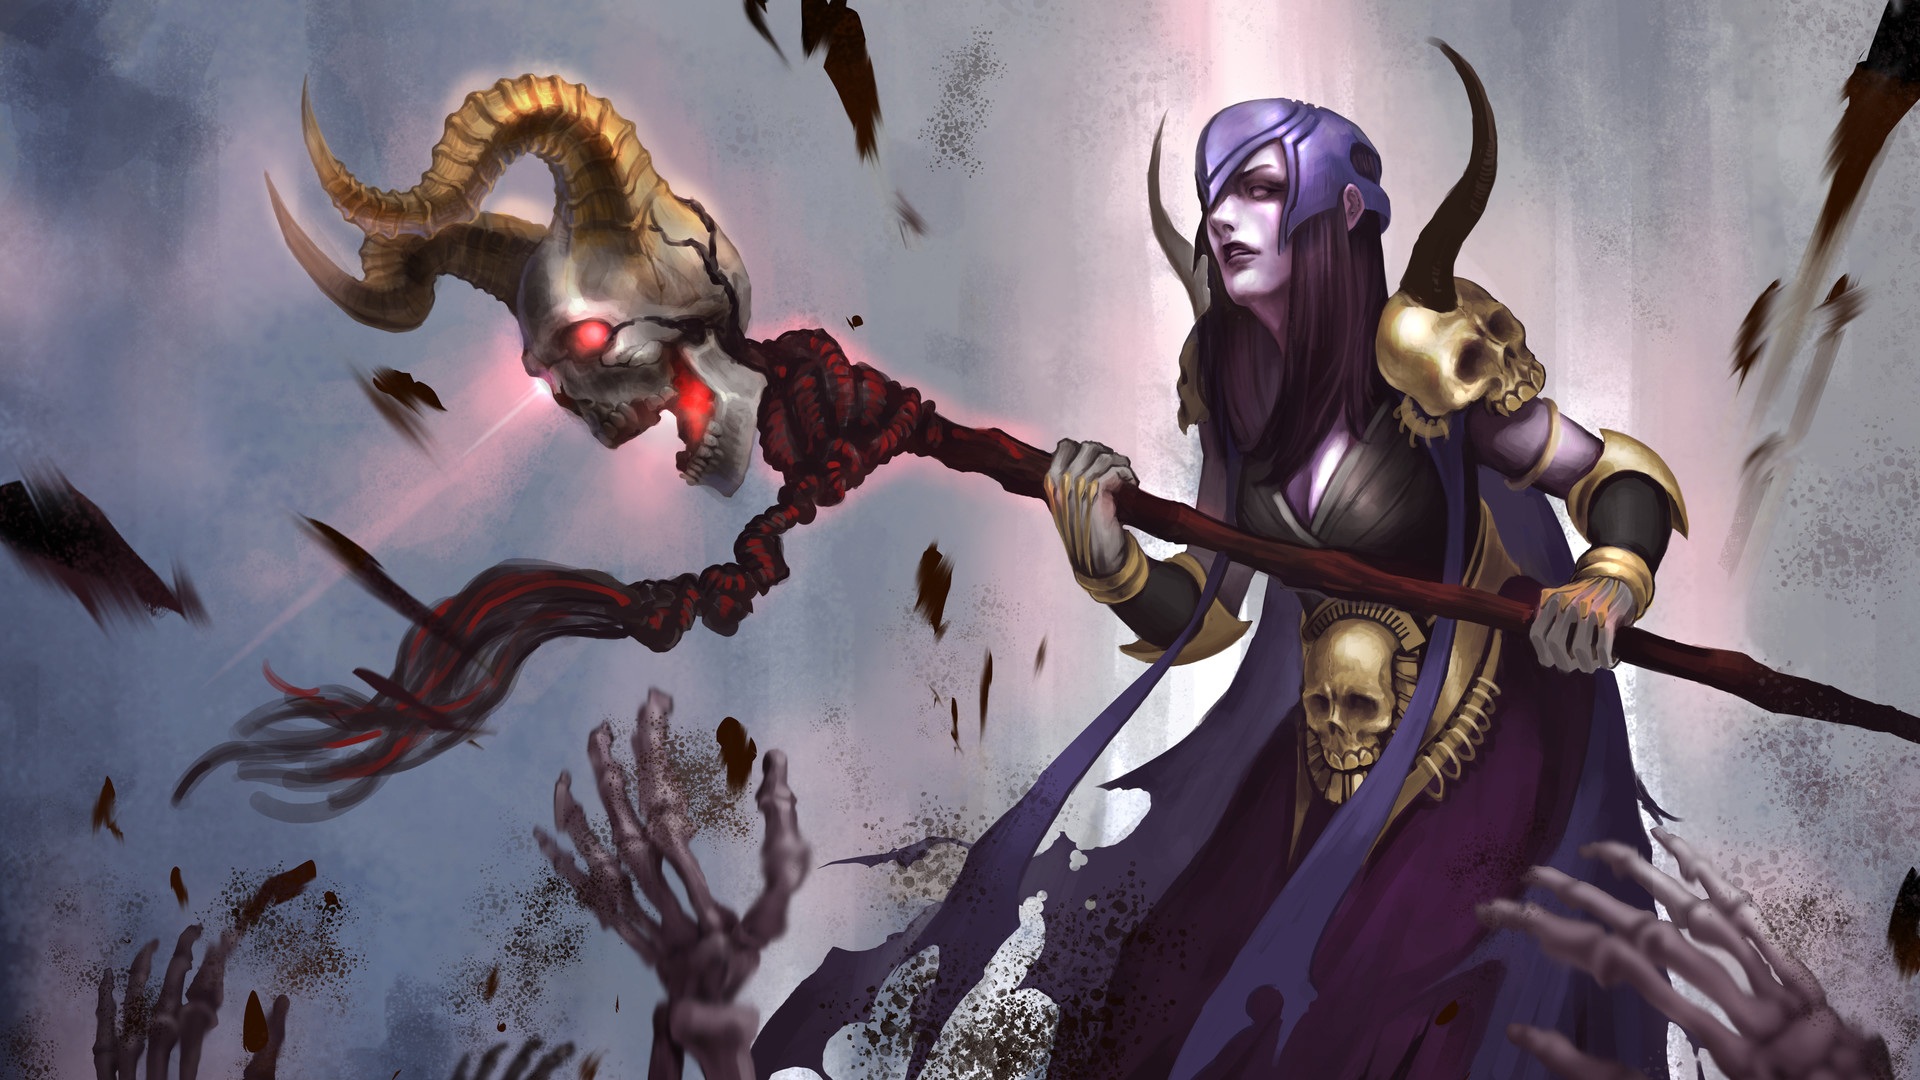 clash royale wallpaper,cg artwork,mythology,demon,fictional character,illustration